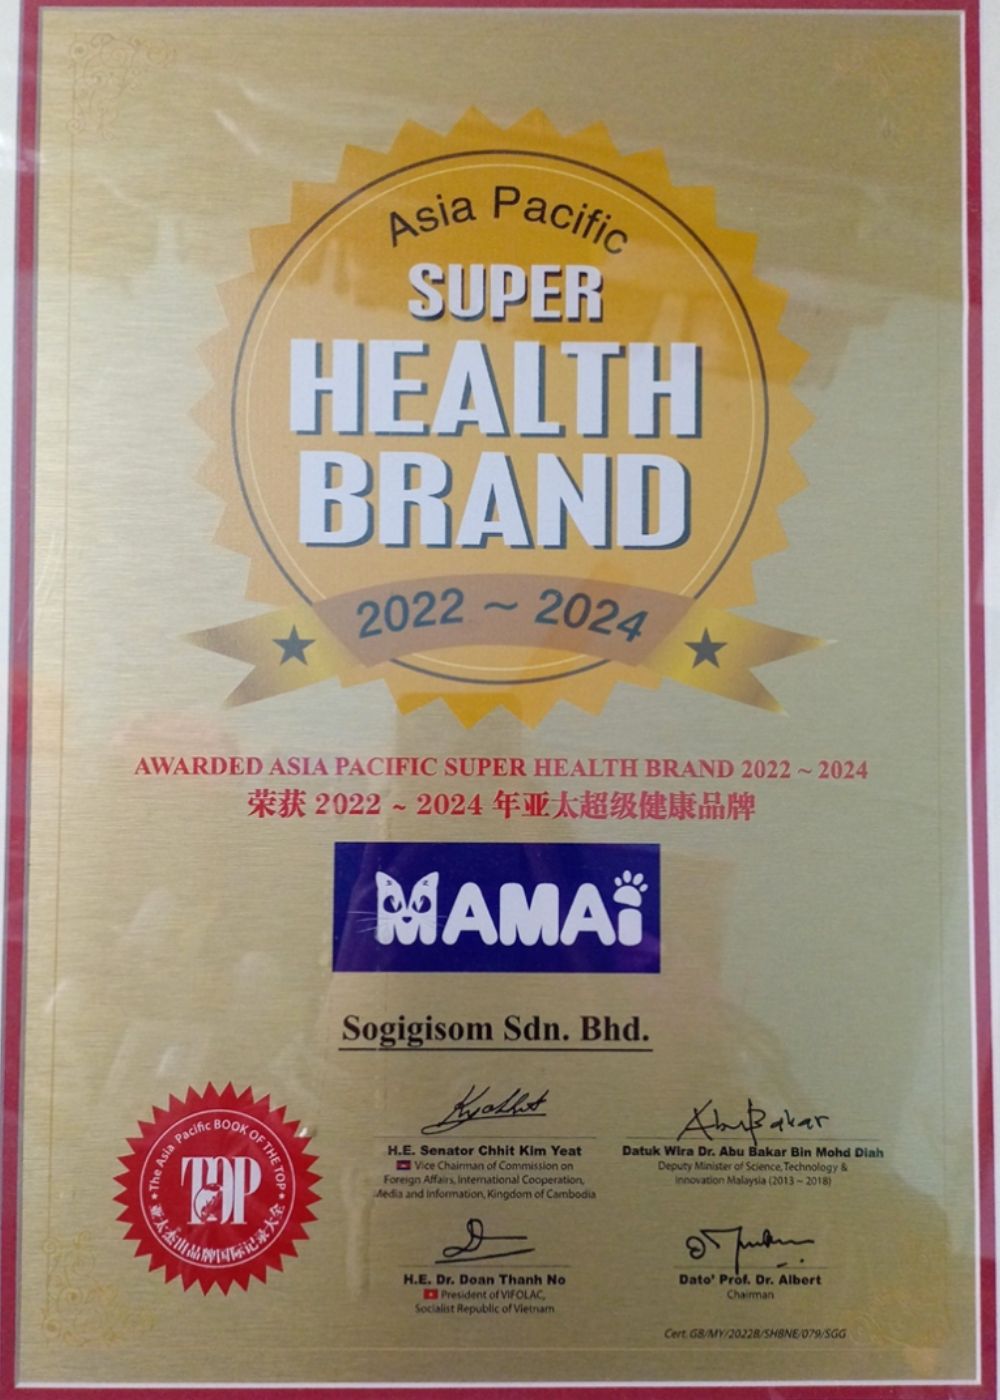 Mamai award certificate 1